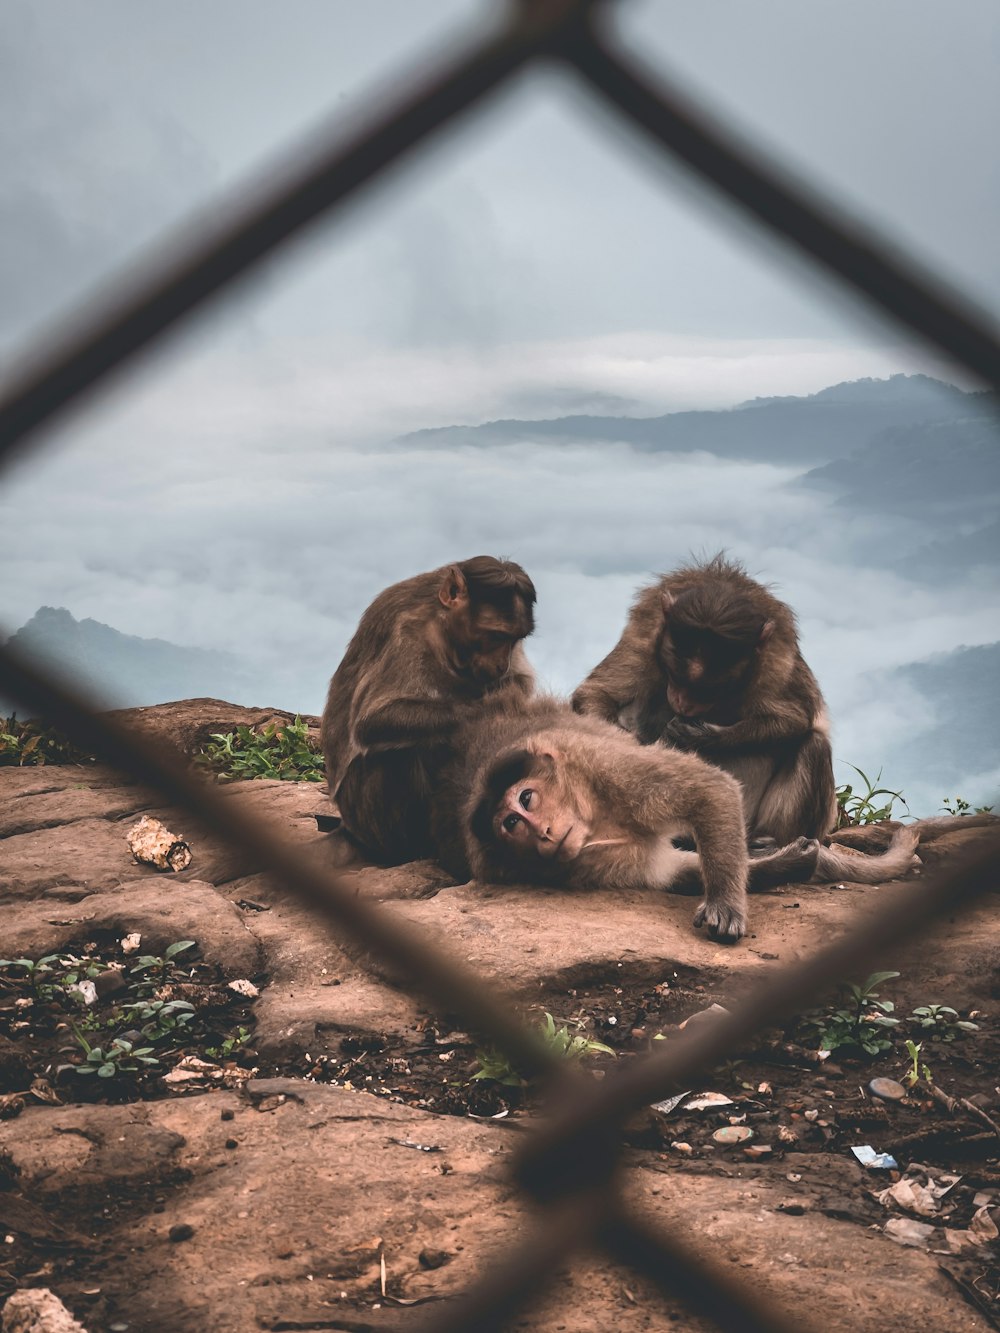 a group of monkeys sitting on a rock